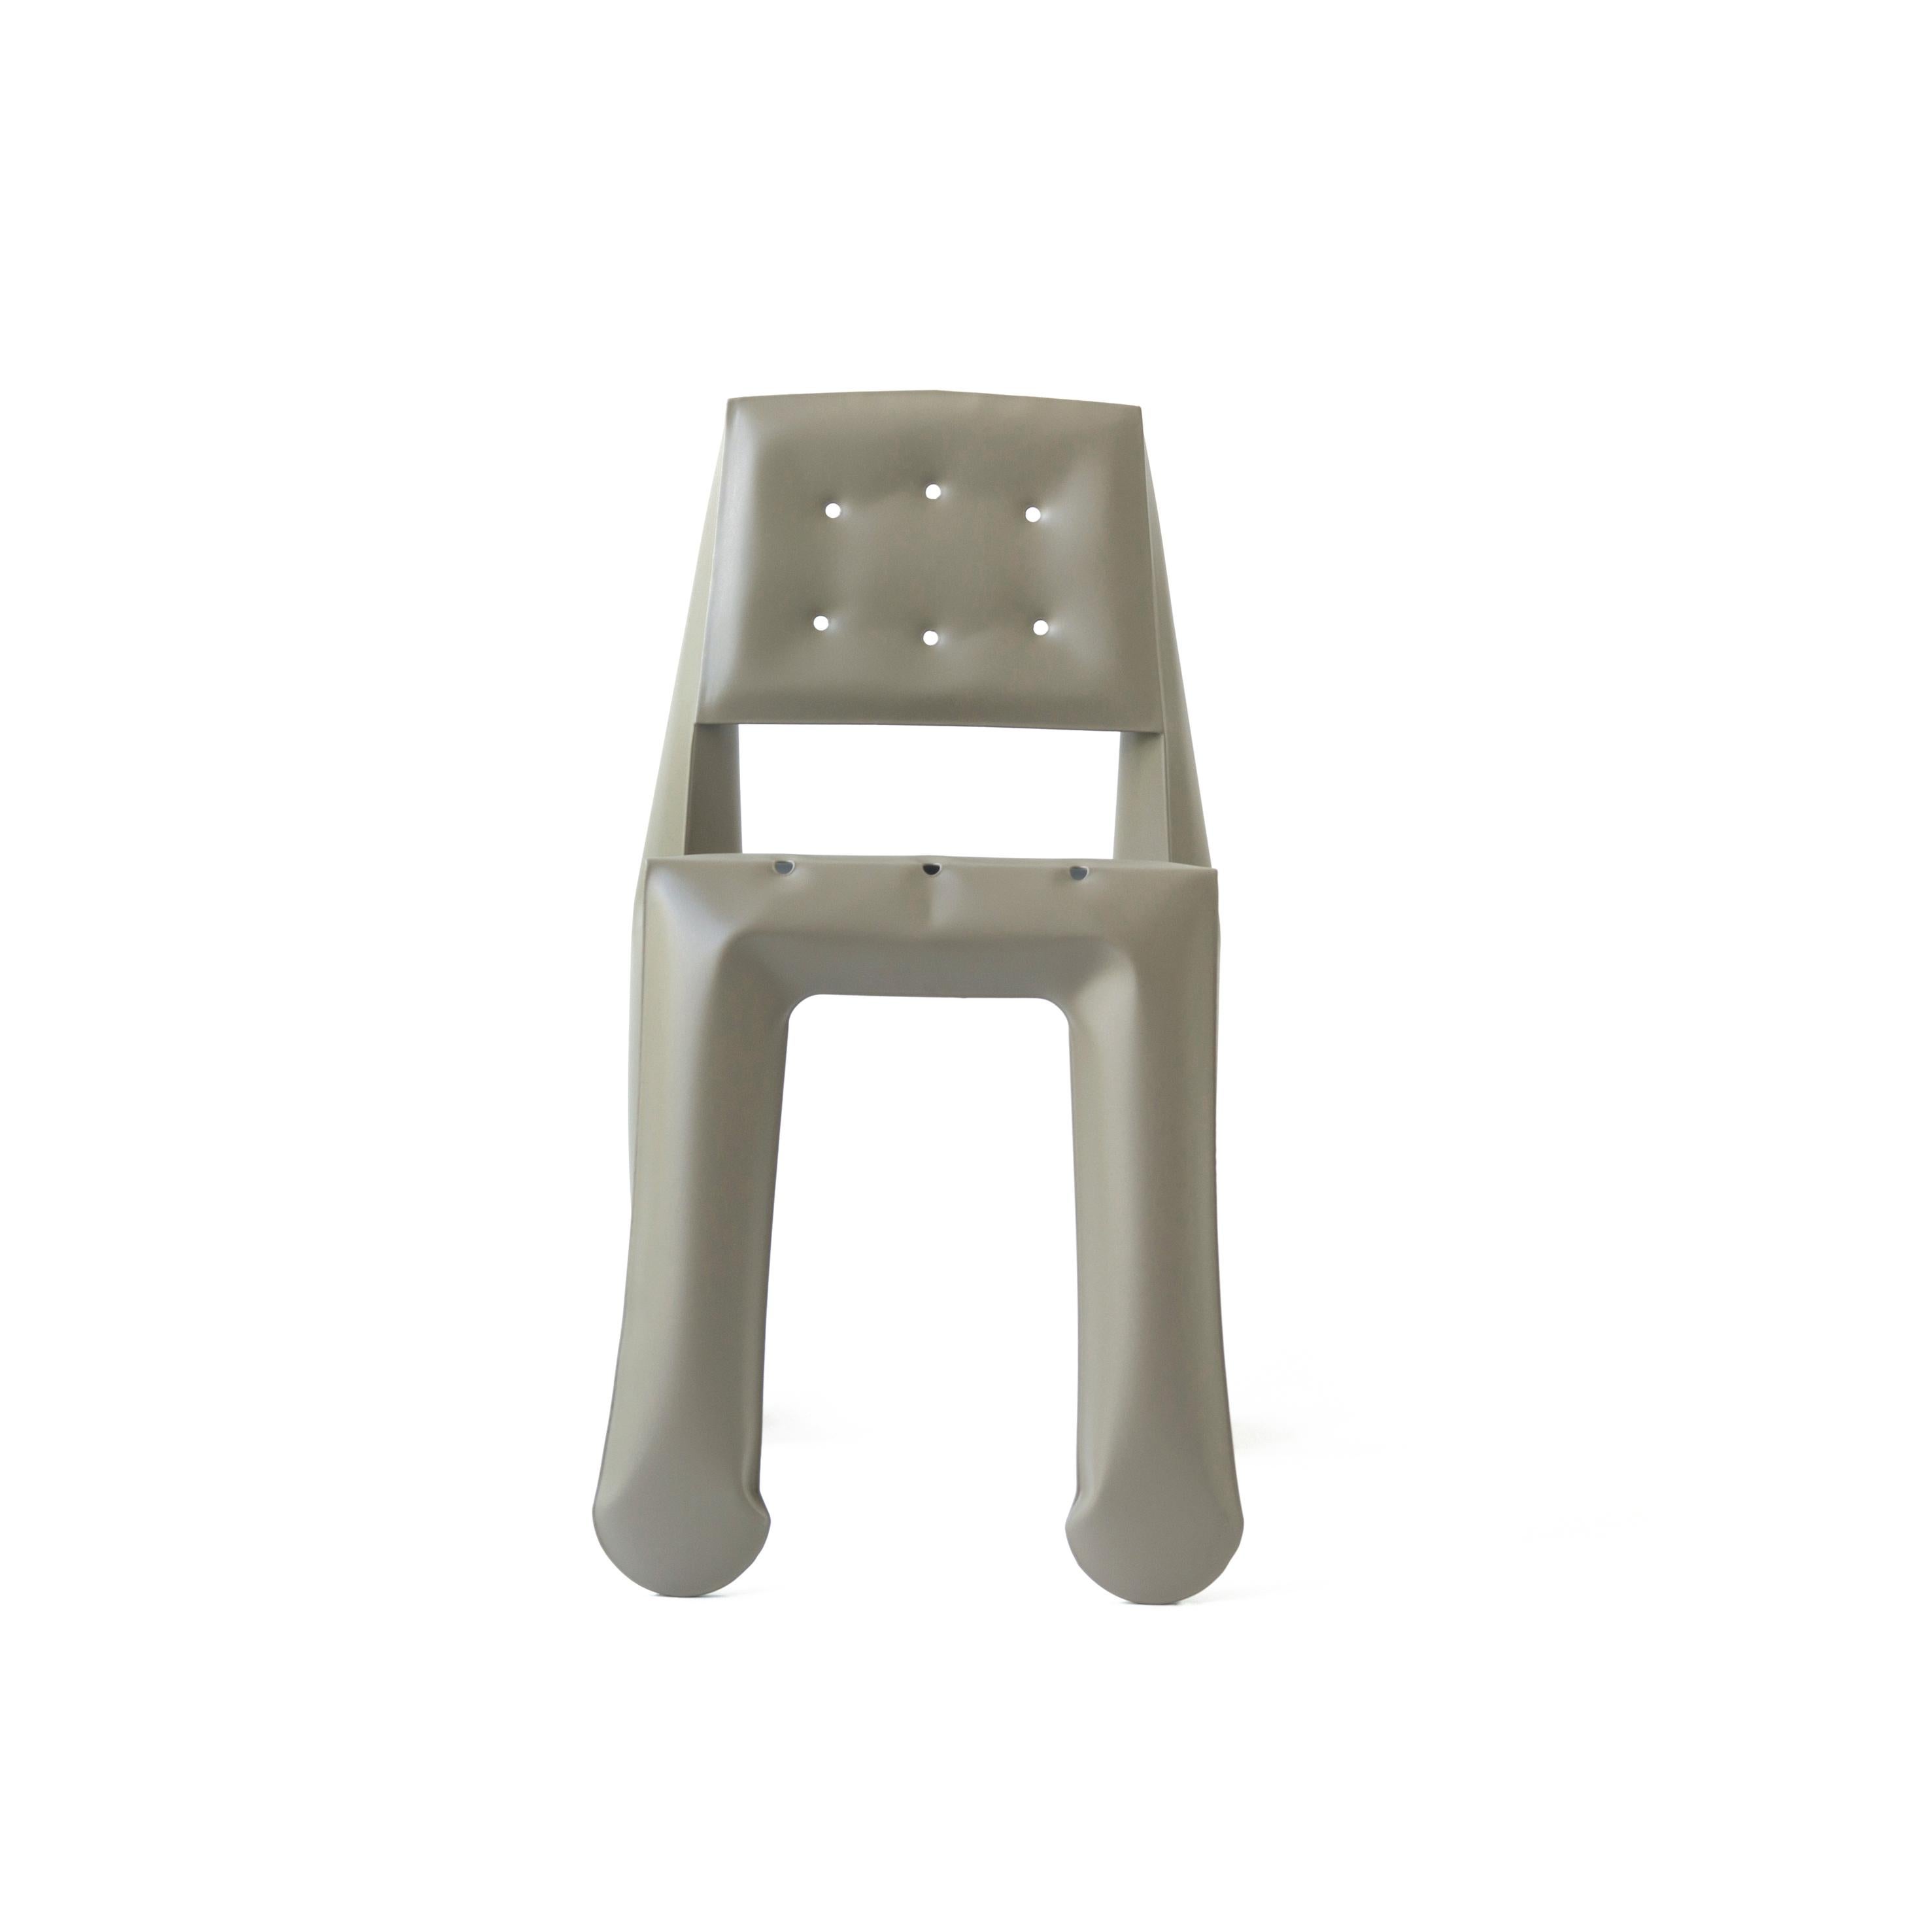 Organic Modern Beige Aluminum Chippensteel 0.5 Sculptural Chair by Zieta For Sale